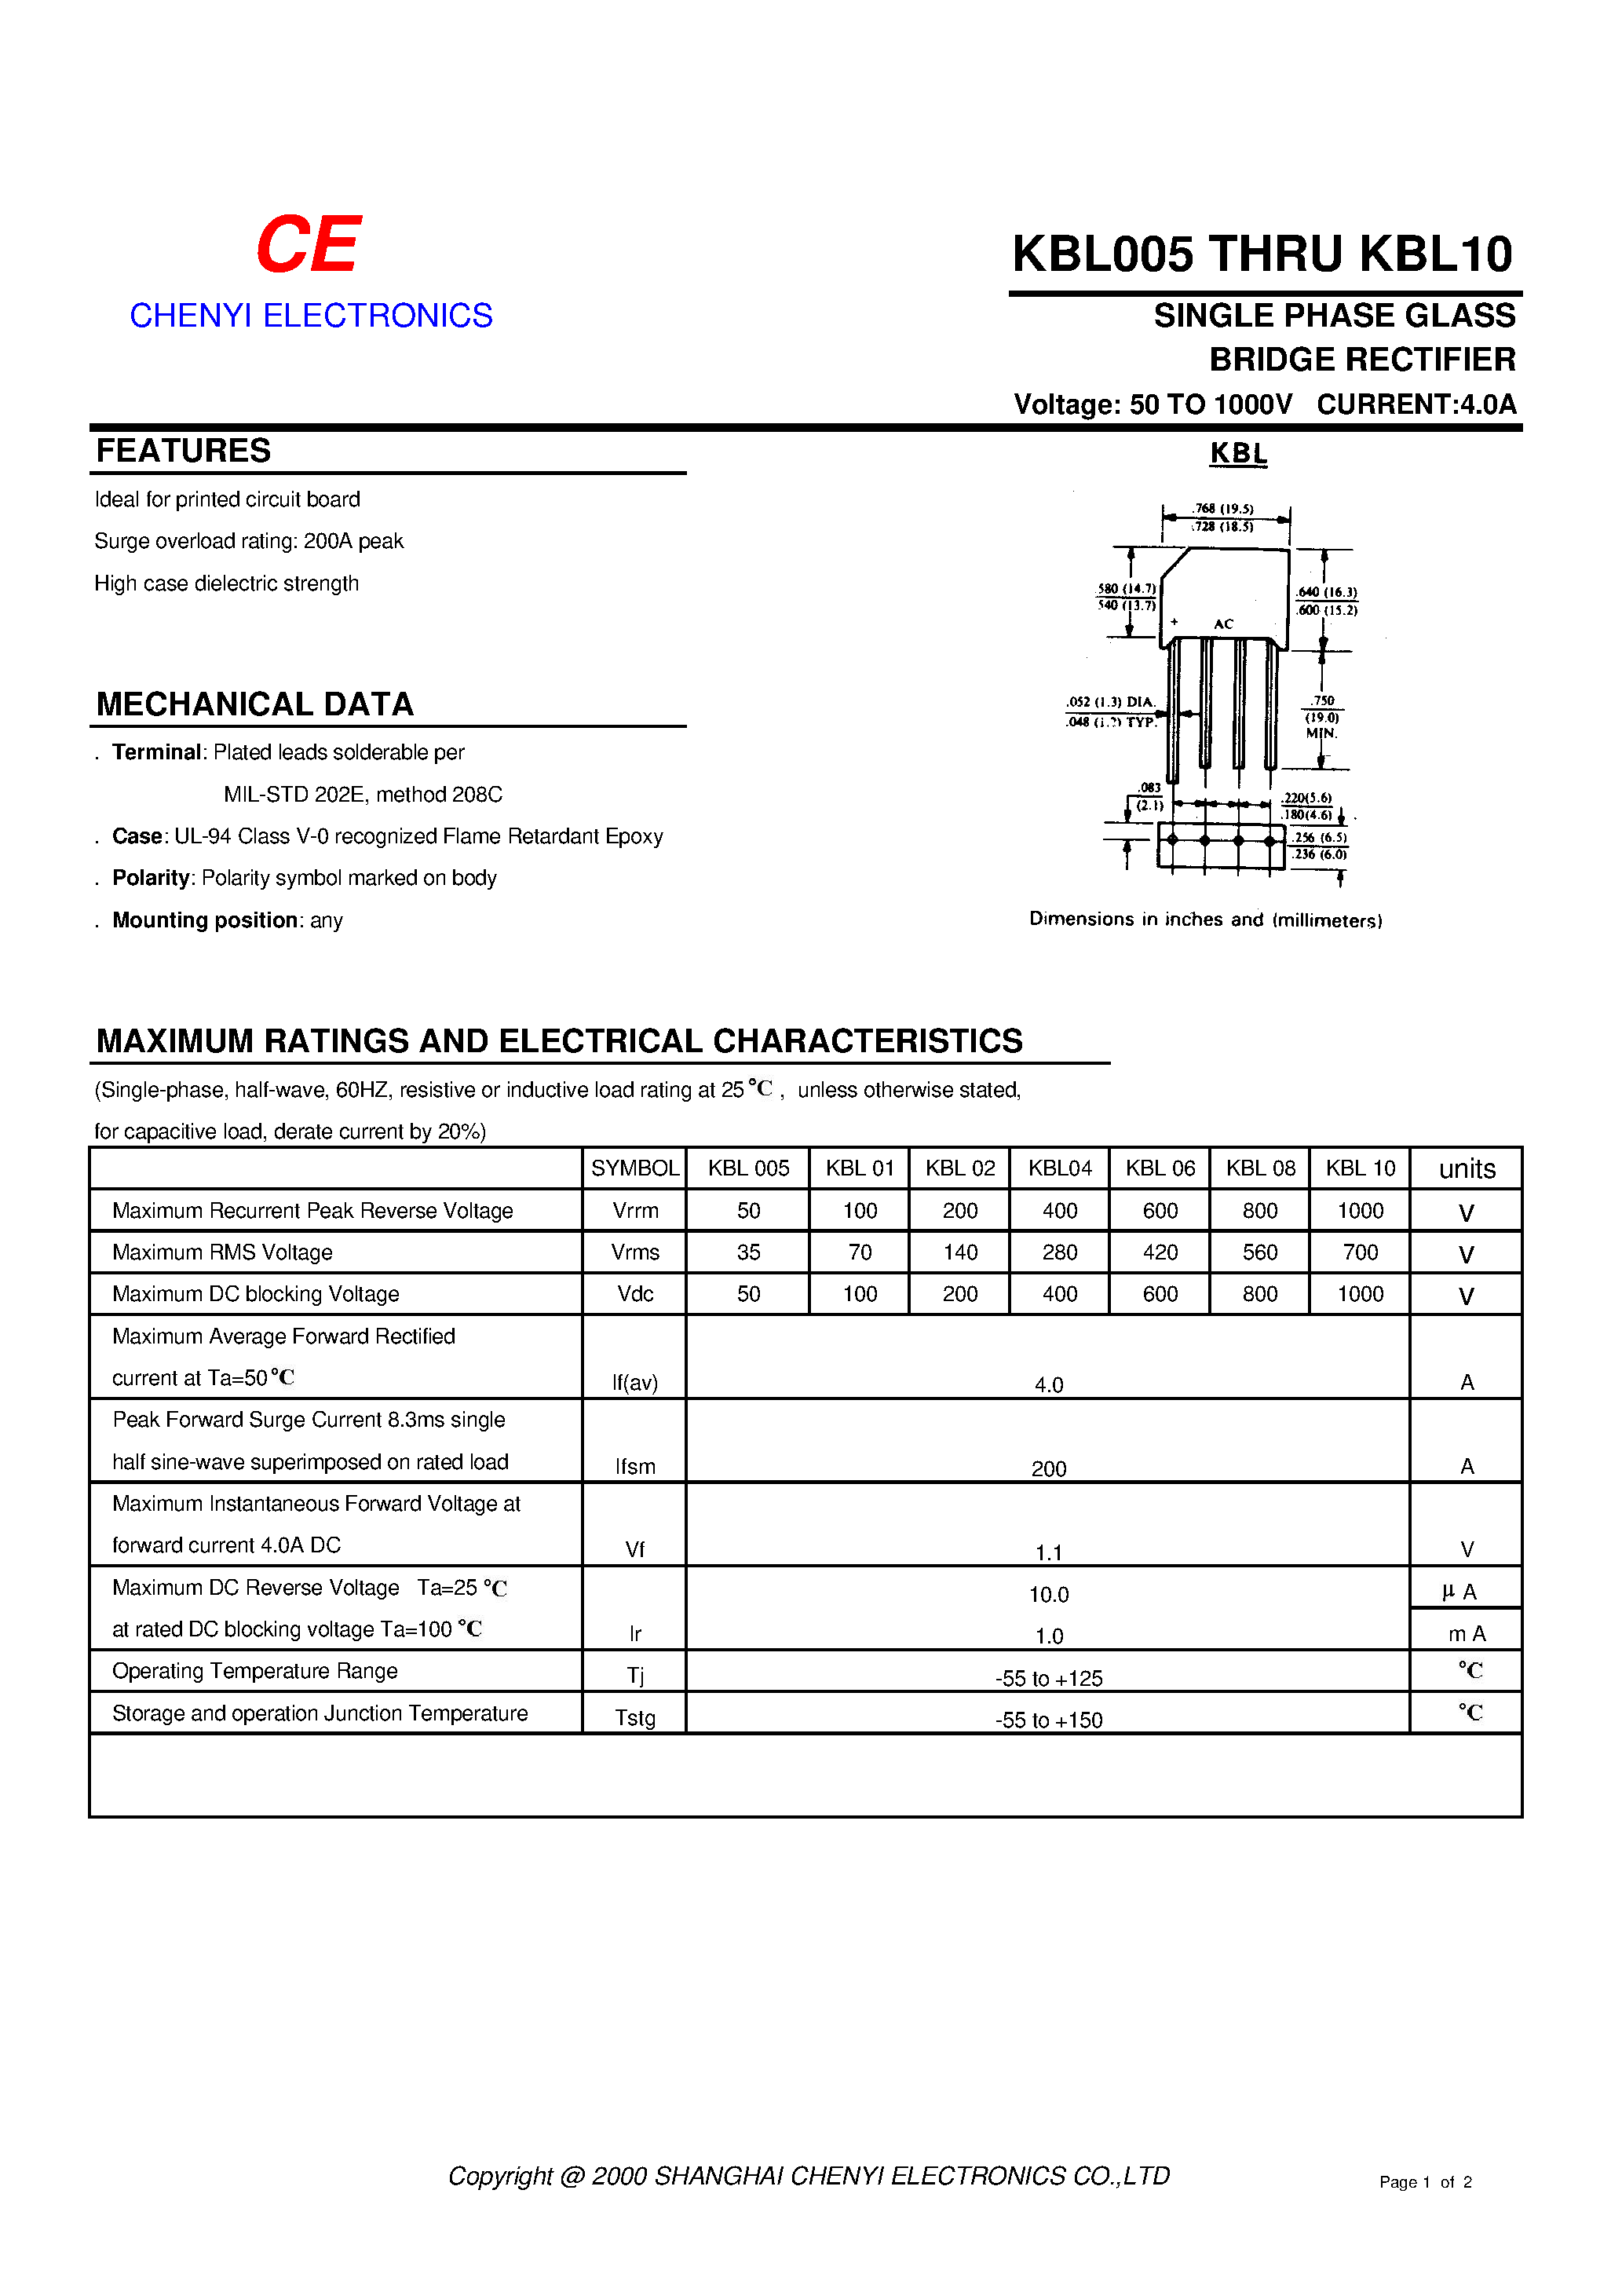 Datasheet KBL005 - SINGLE PHASE GLASS BRIDGE RECTIFIER page 1